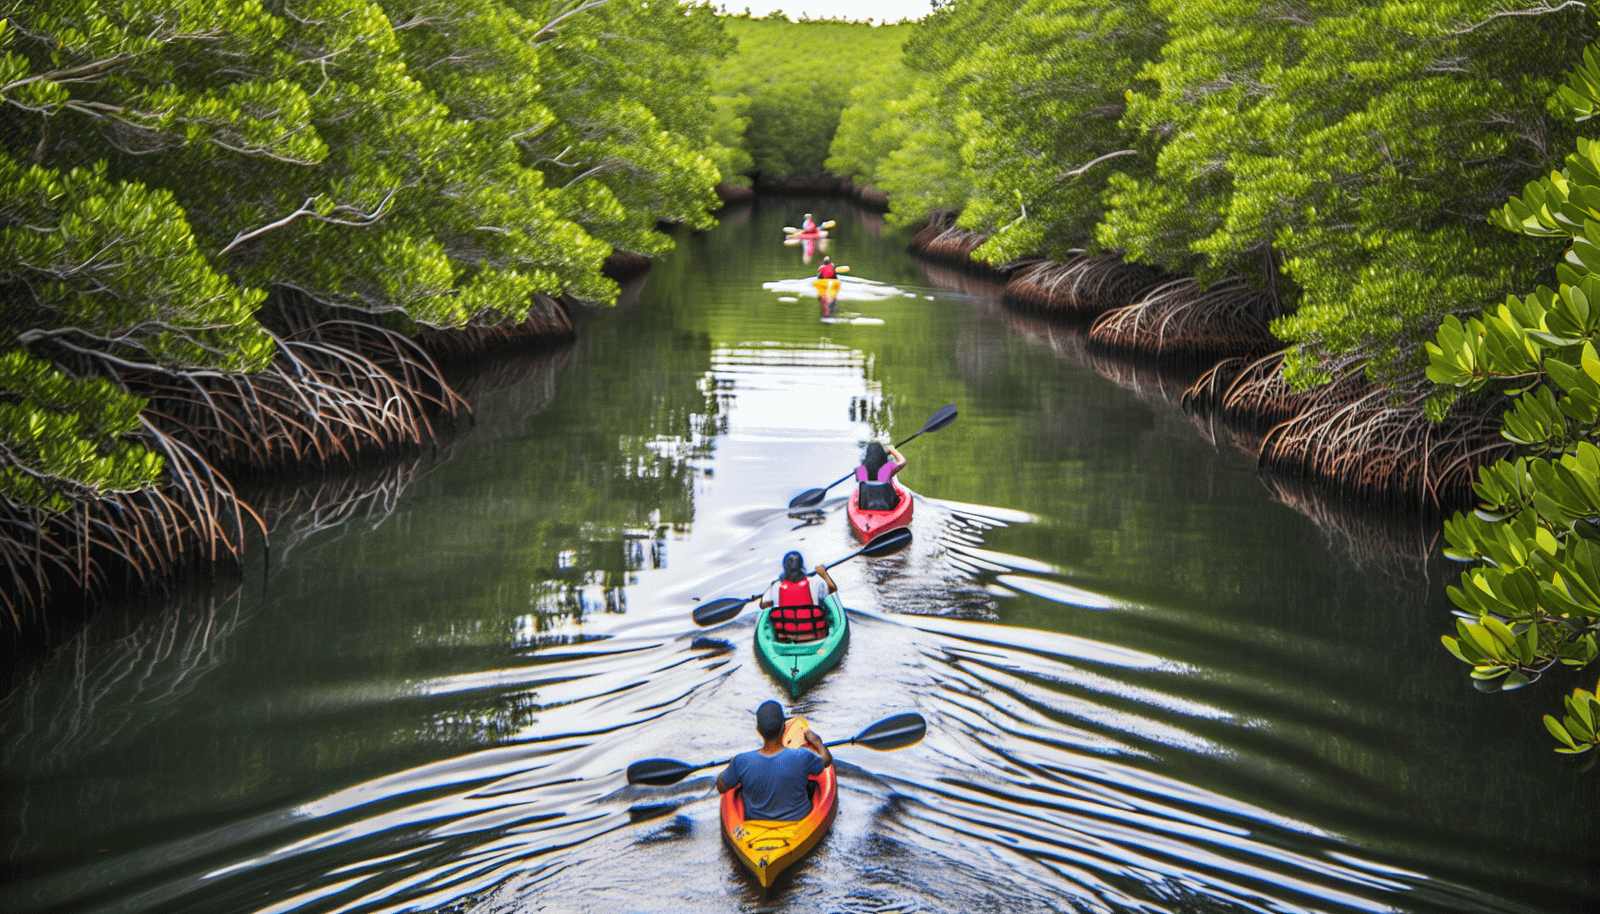 Kayakers exploring the winding waterways through mangrove forests